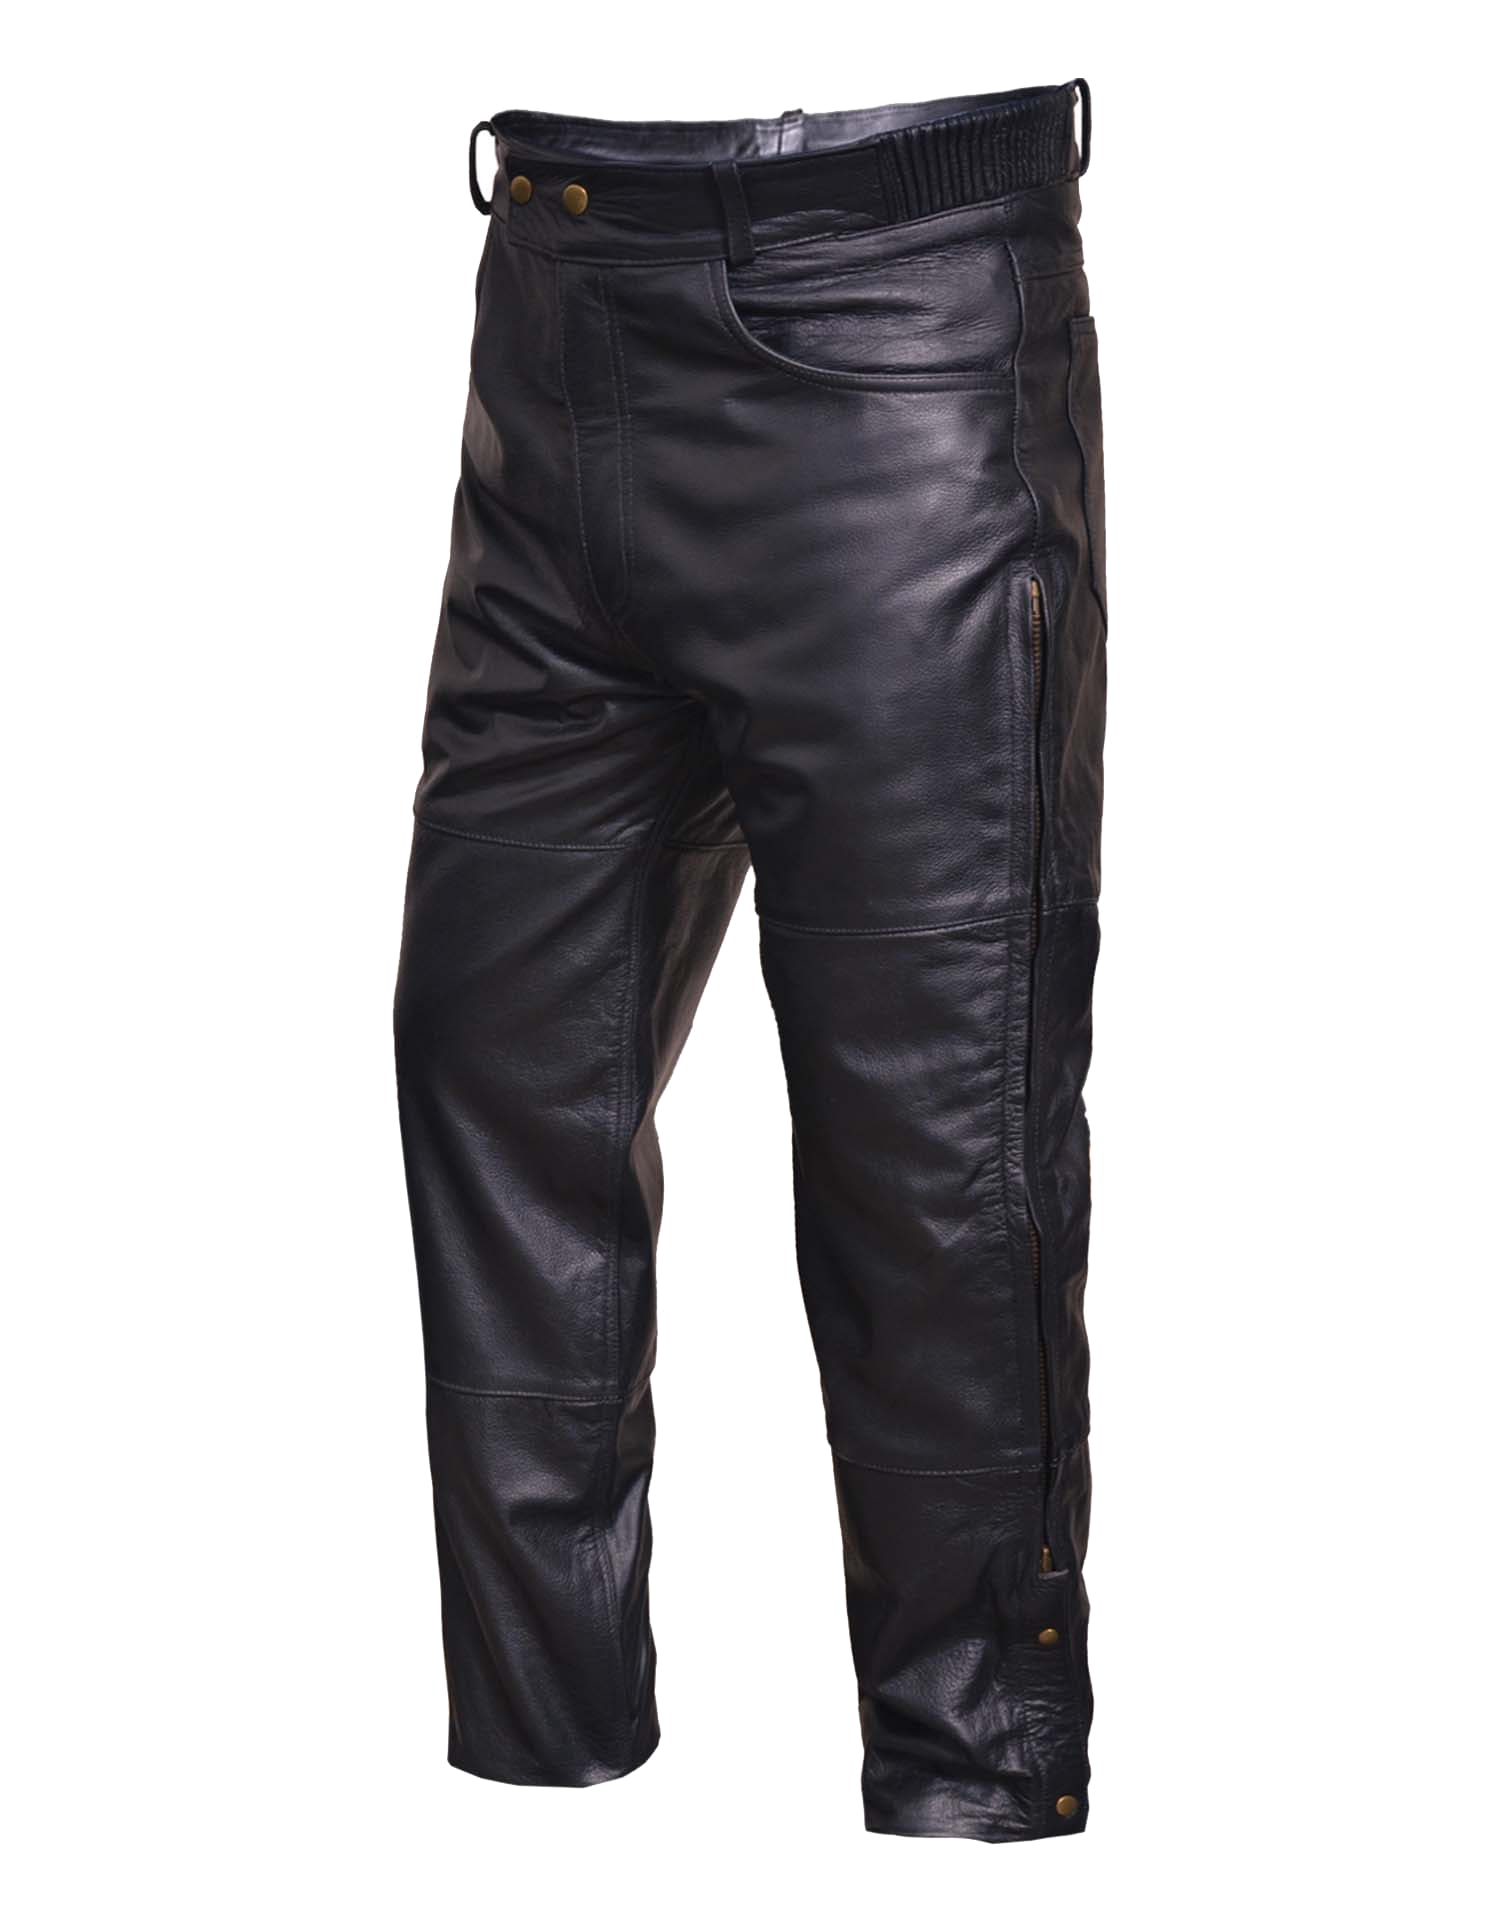 Men's Premium Leather Overpants